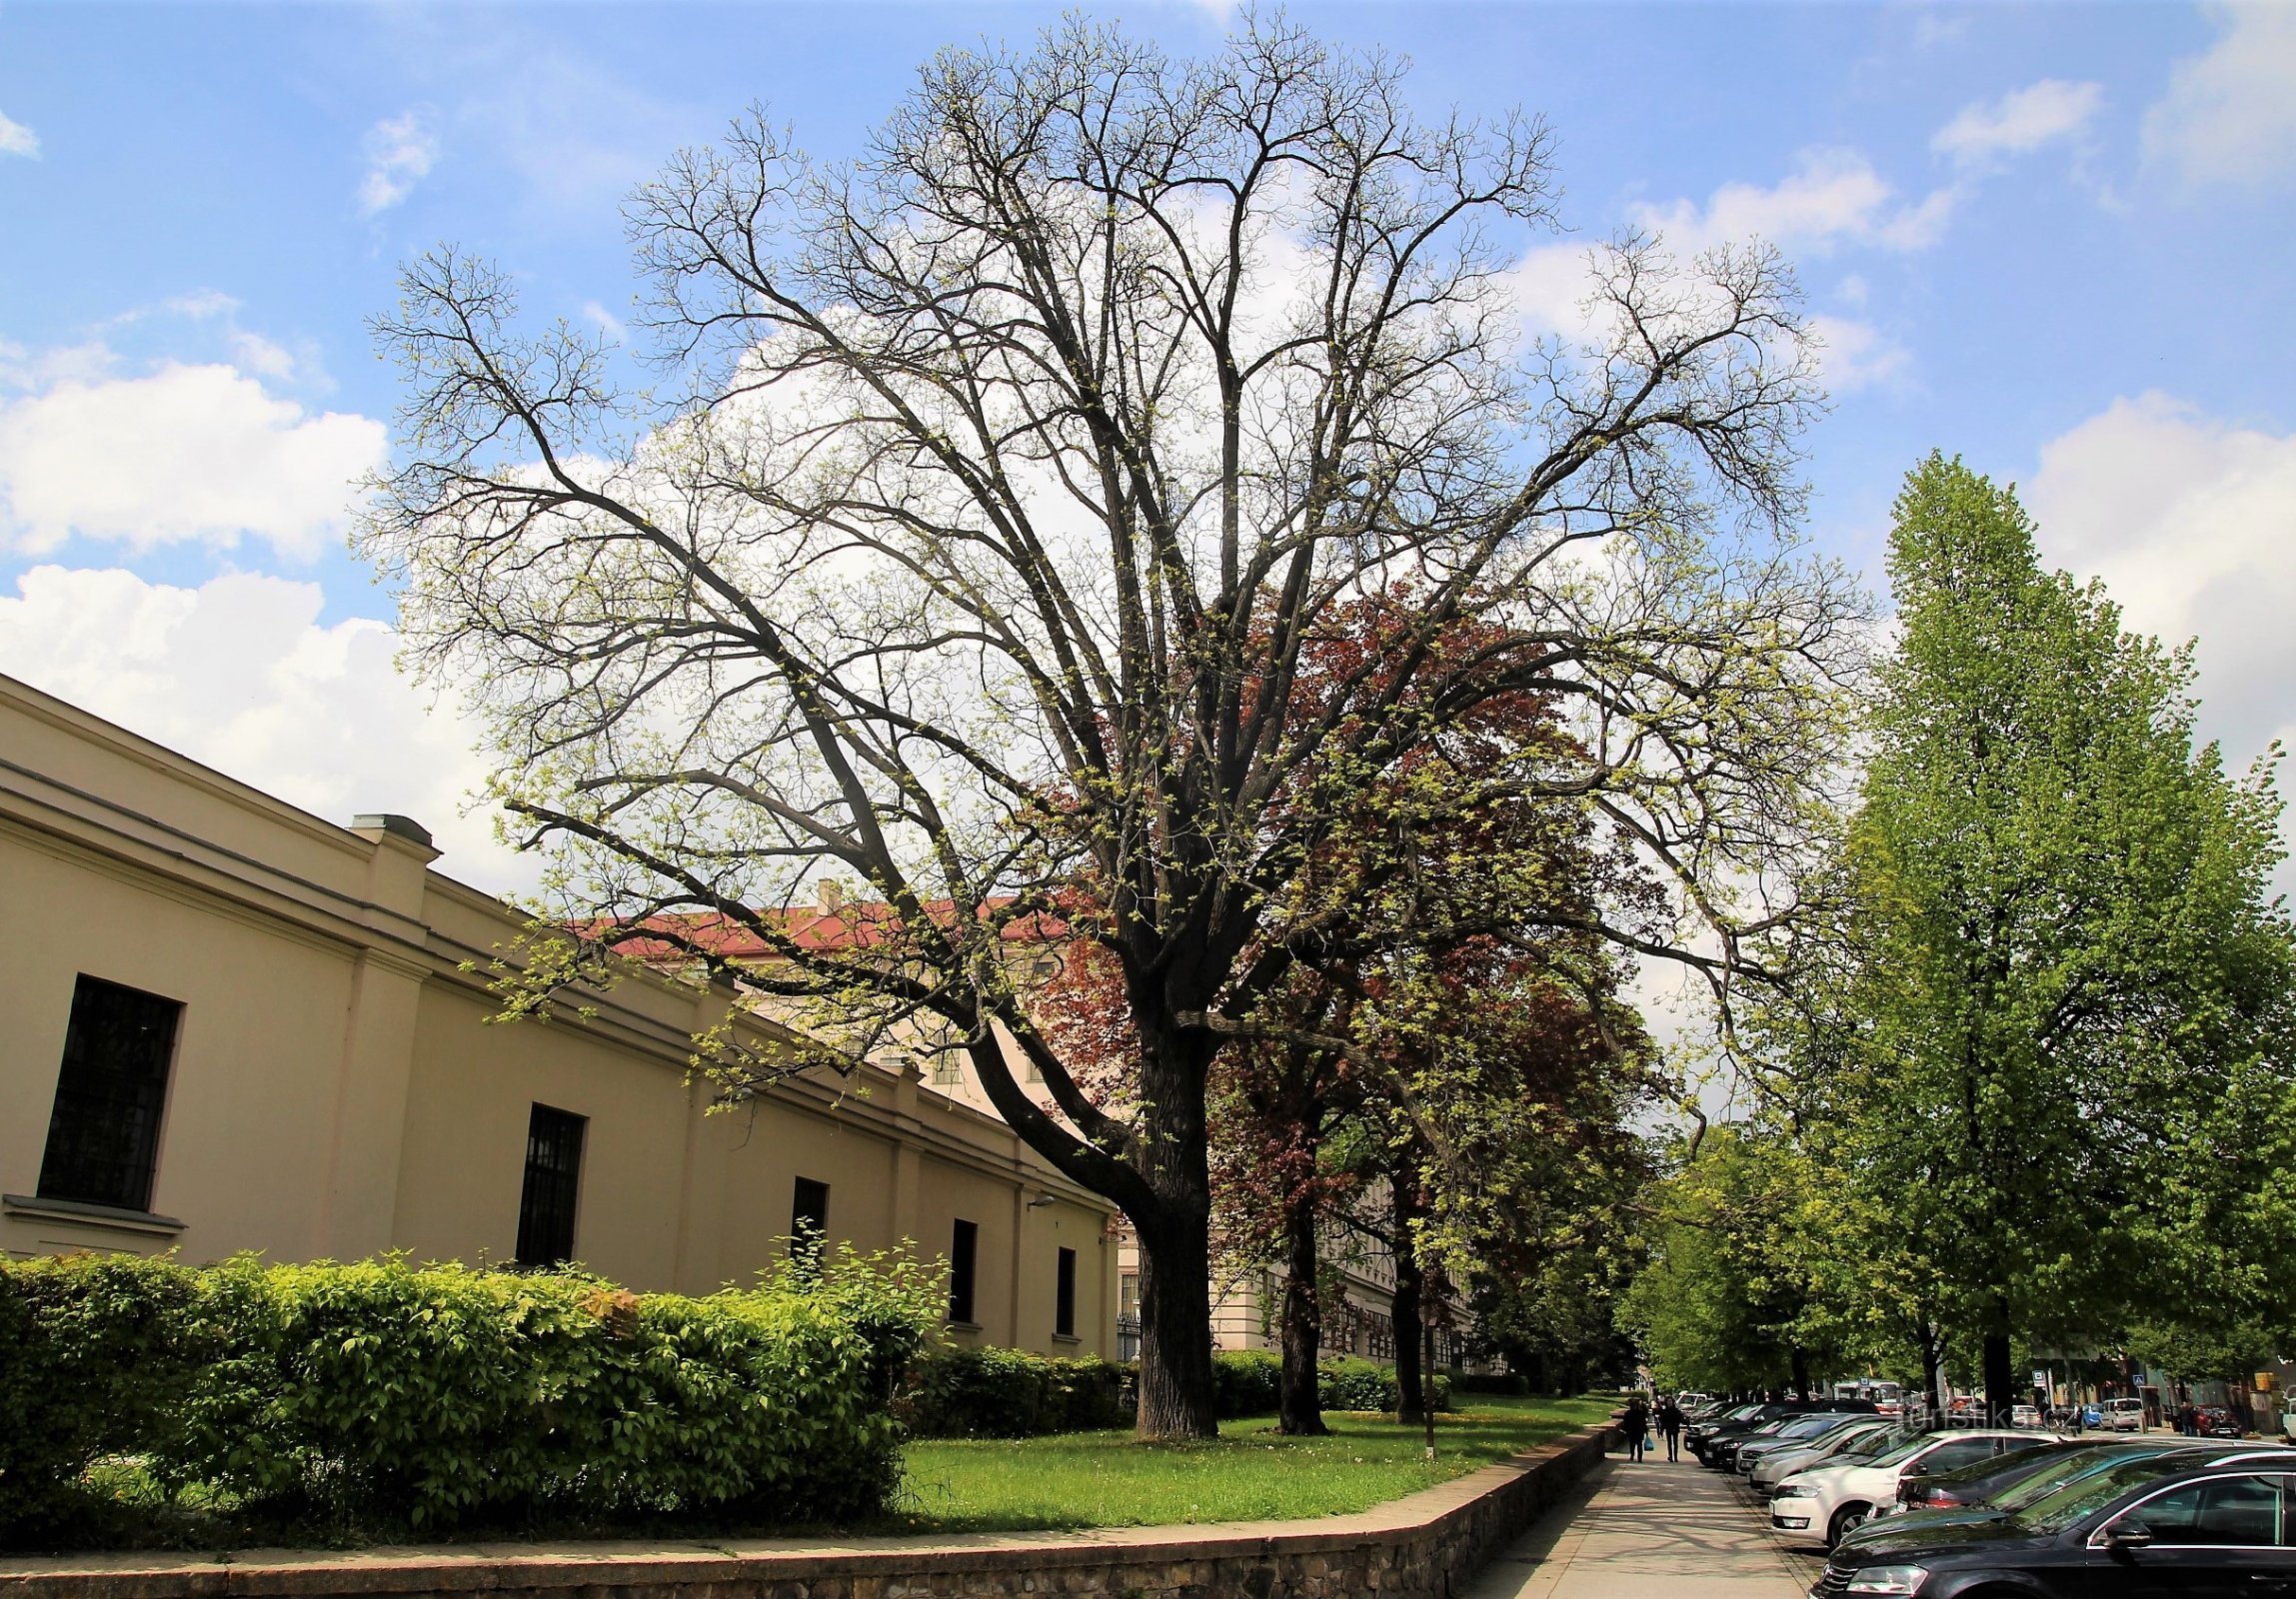 Sort valnøddetræ på Štefánikova gaden